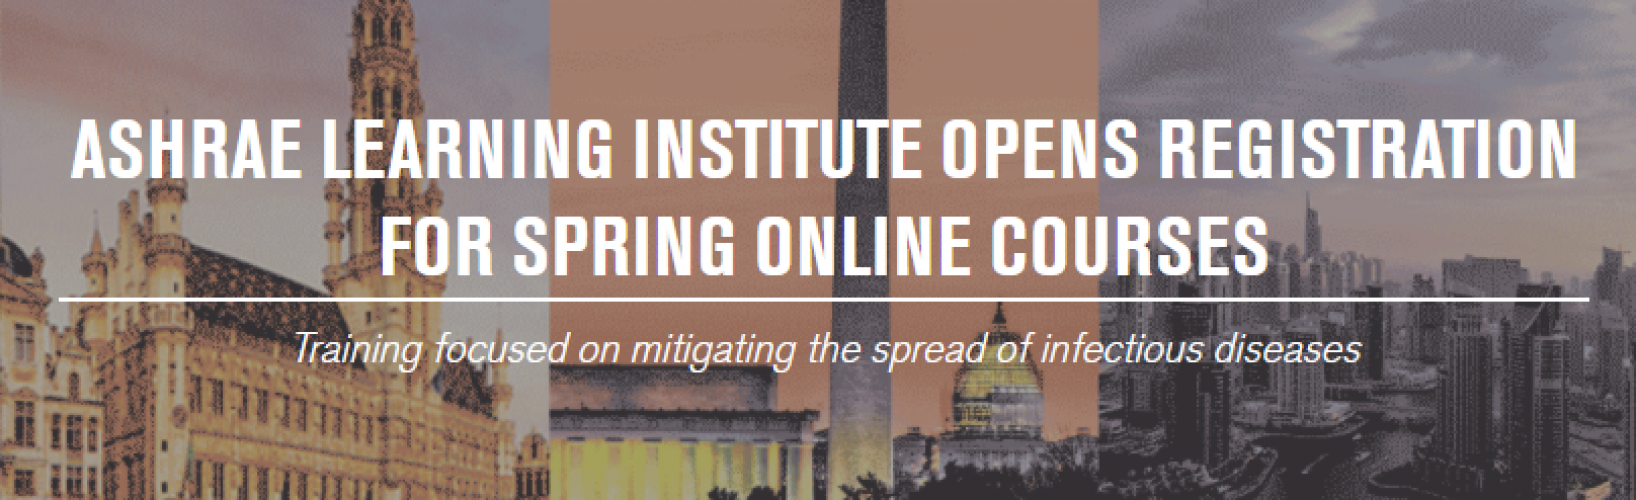 ASHRAE Learning Institute Opens Registration for Spring Online Courses